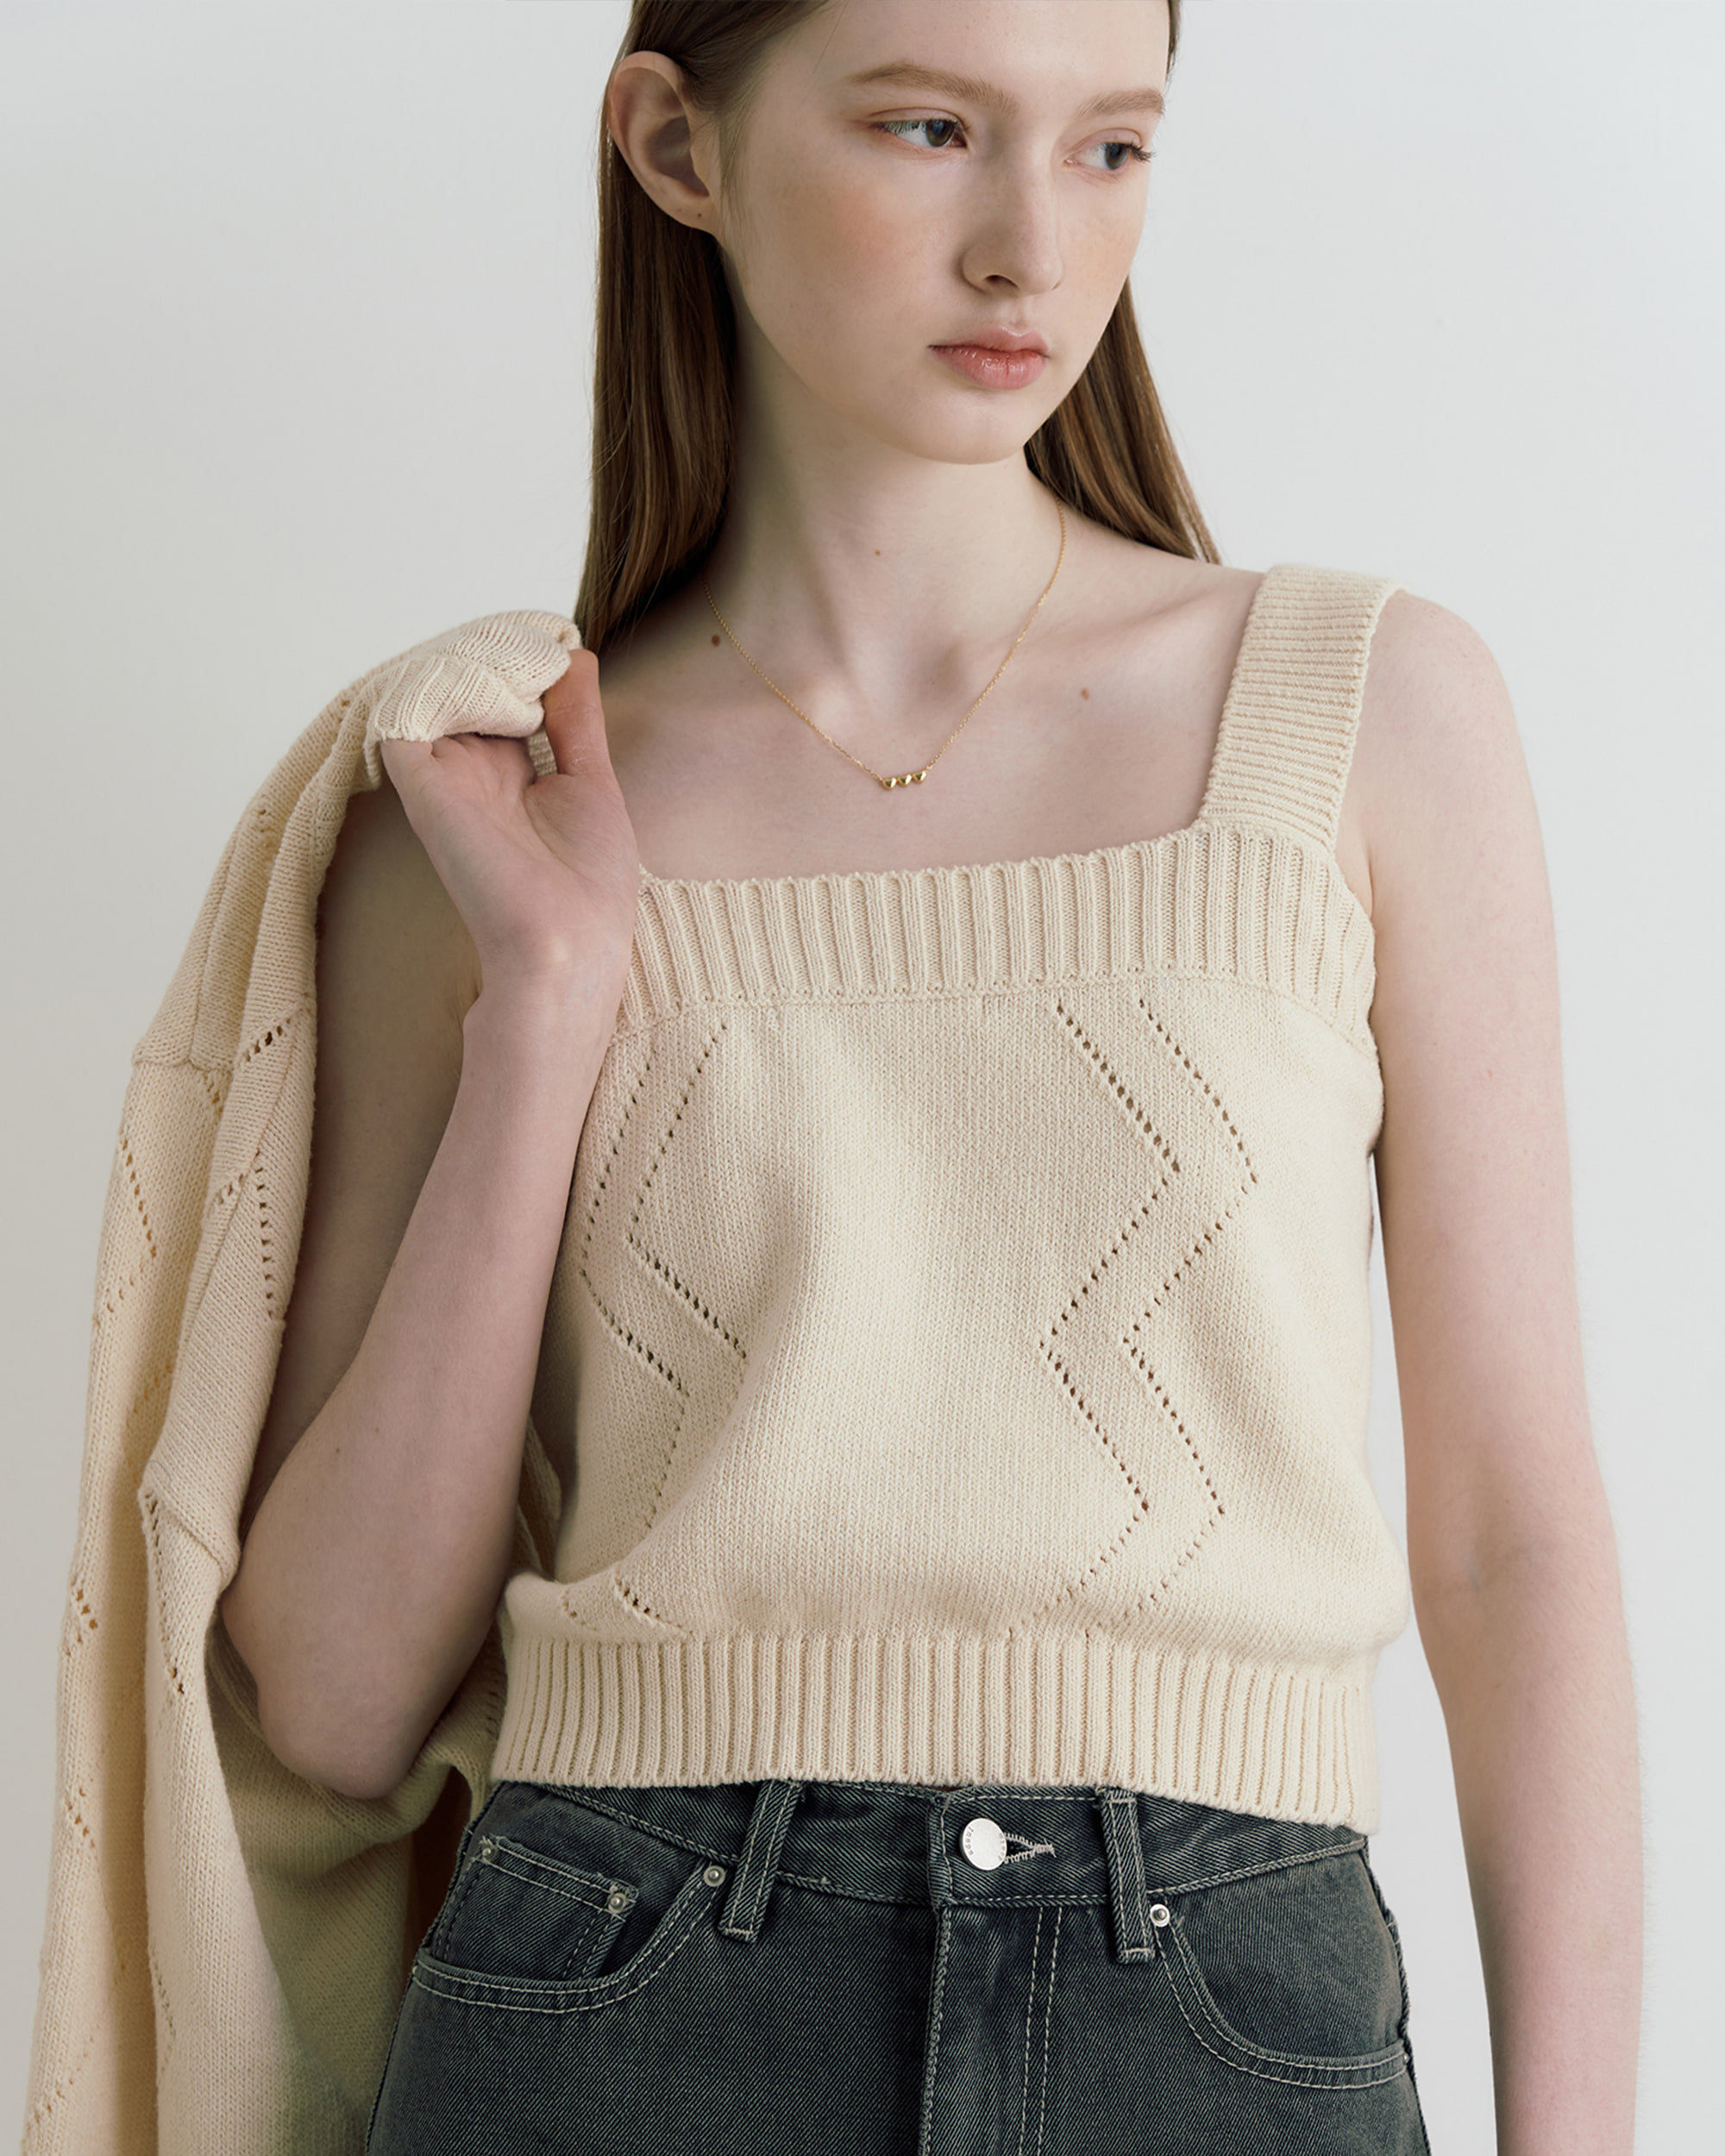 Zigzag square neck button knit sleeveless  - cream